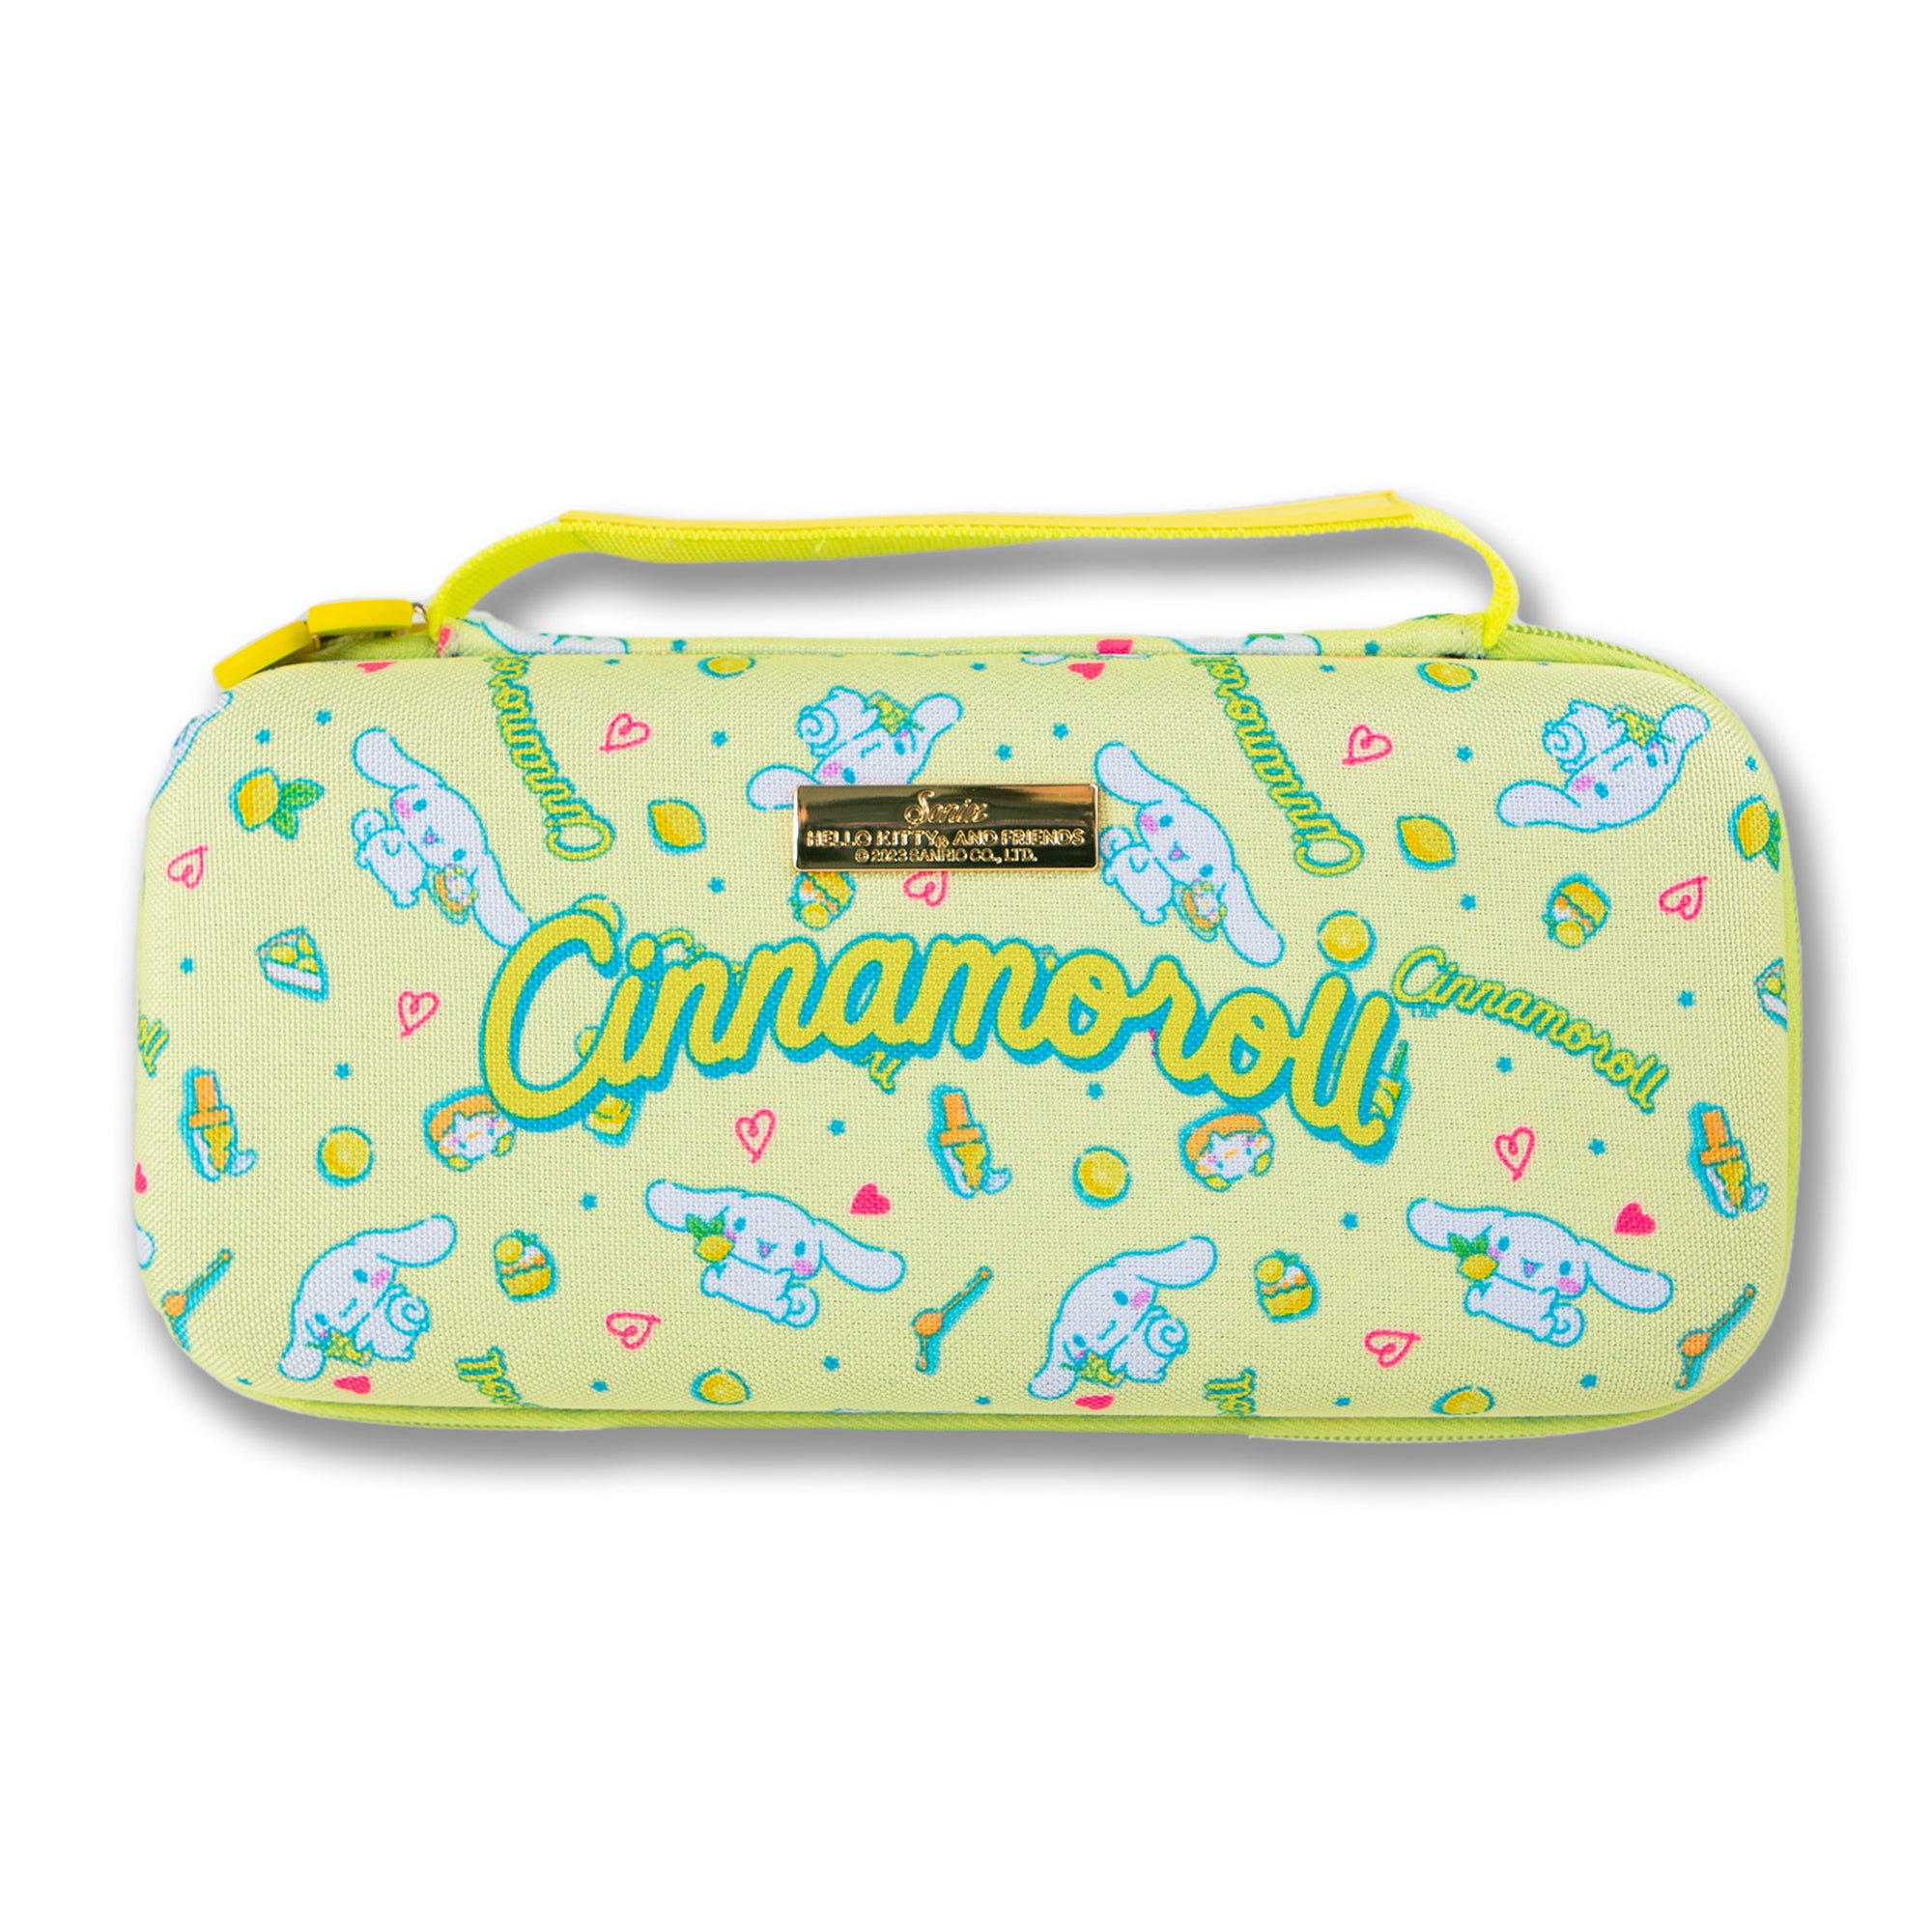 Cinnamoroll x Sonix Nintendo Switch Carrying Case (Lemon Sweets) Accessory BySonix Inc.   